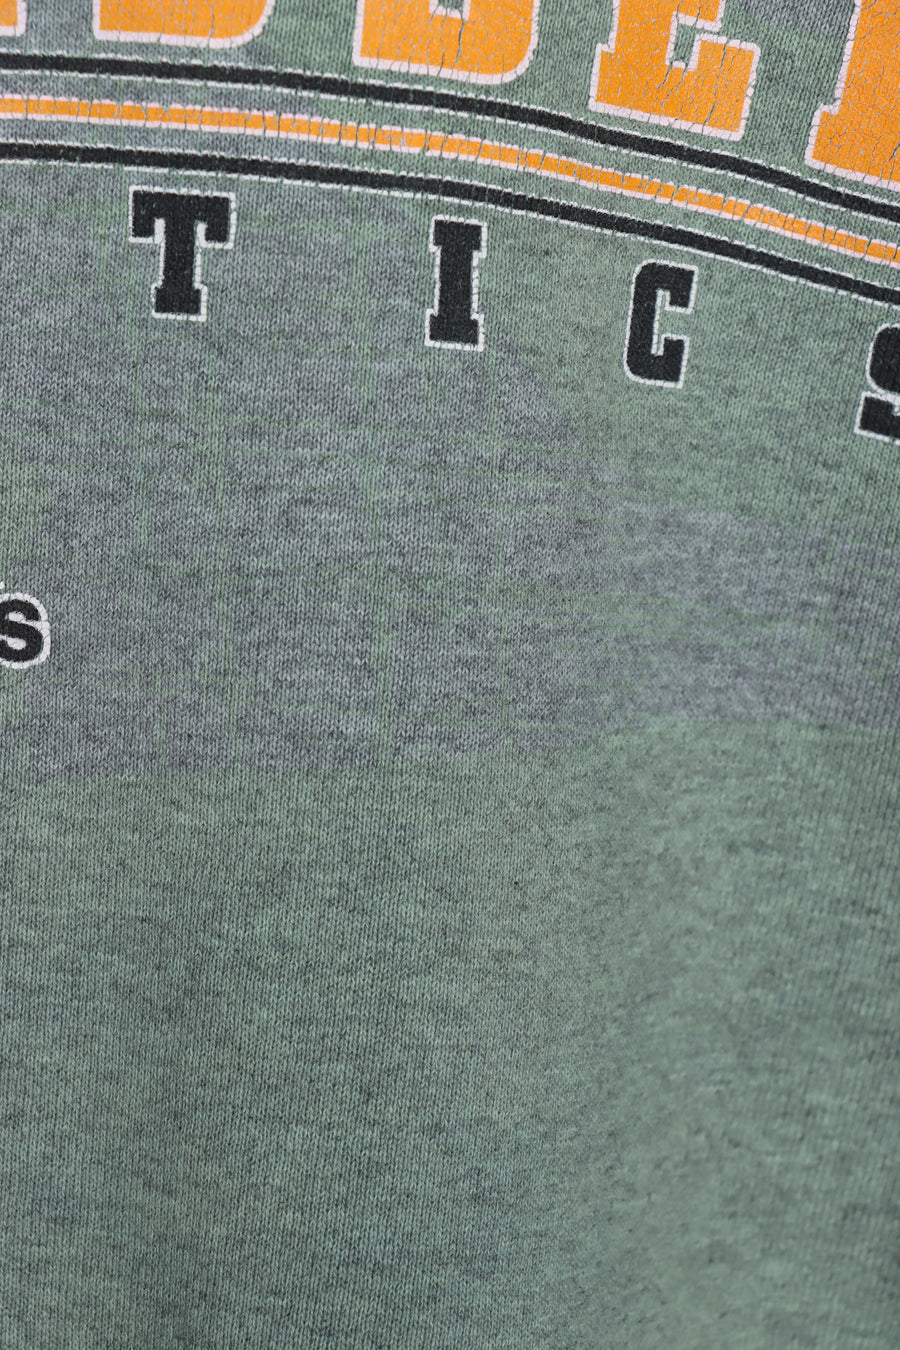 ADIDAS Tennessee Athletics Orange & Green Sweatshirt (XXL)